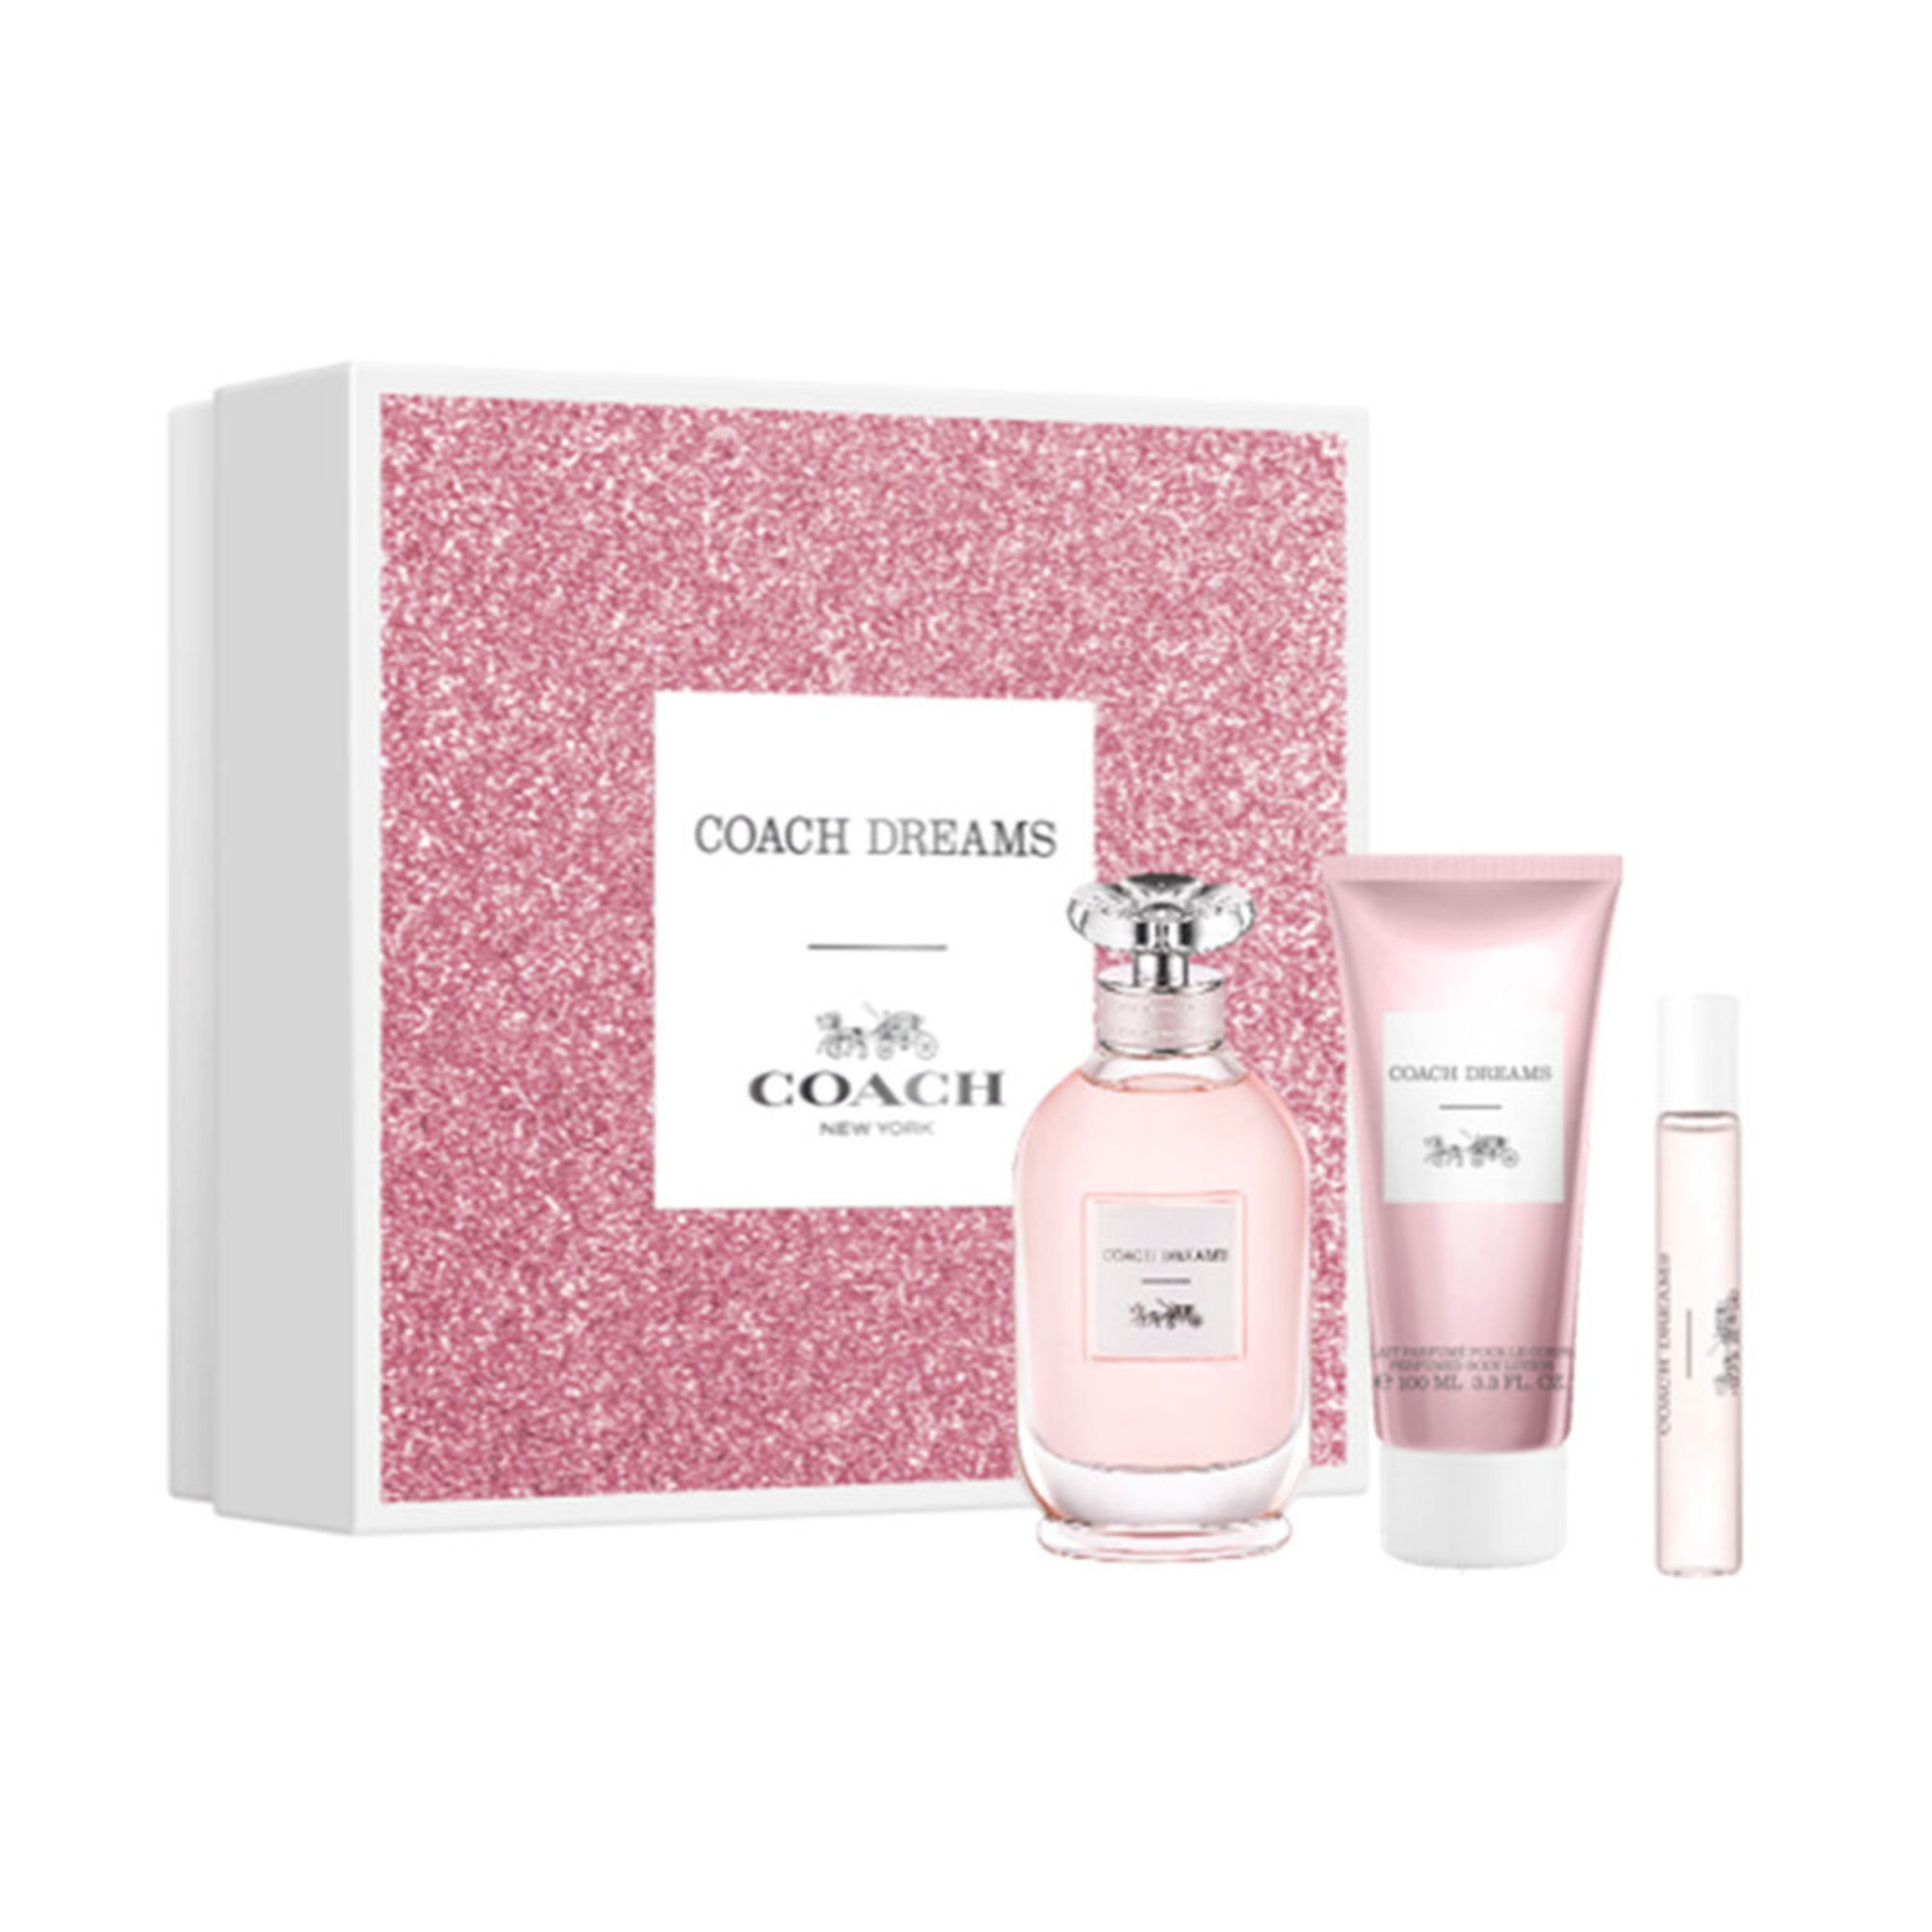 Coach Dreams 3pc Set | Perfume Gift Sets | Beauty - Shop Your Navy ...